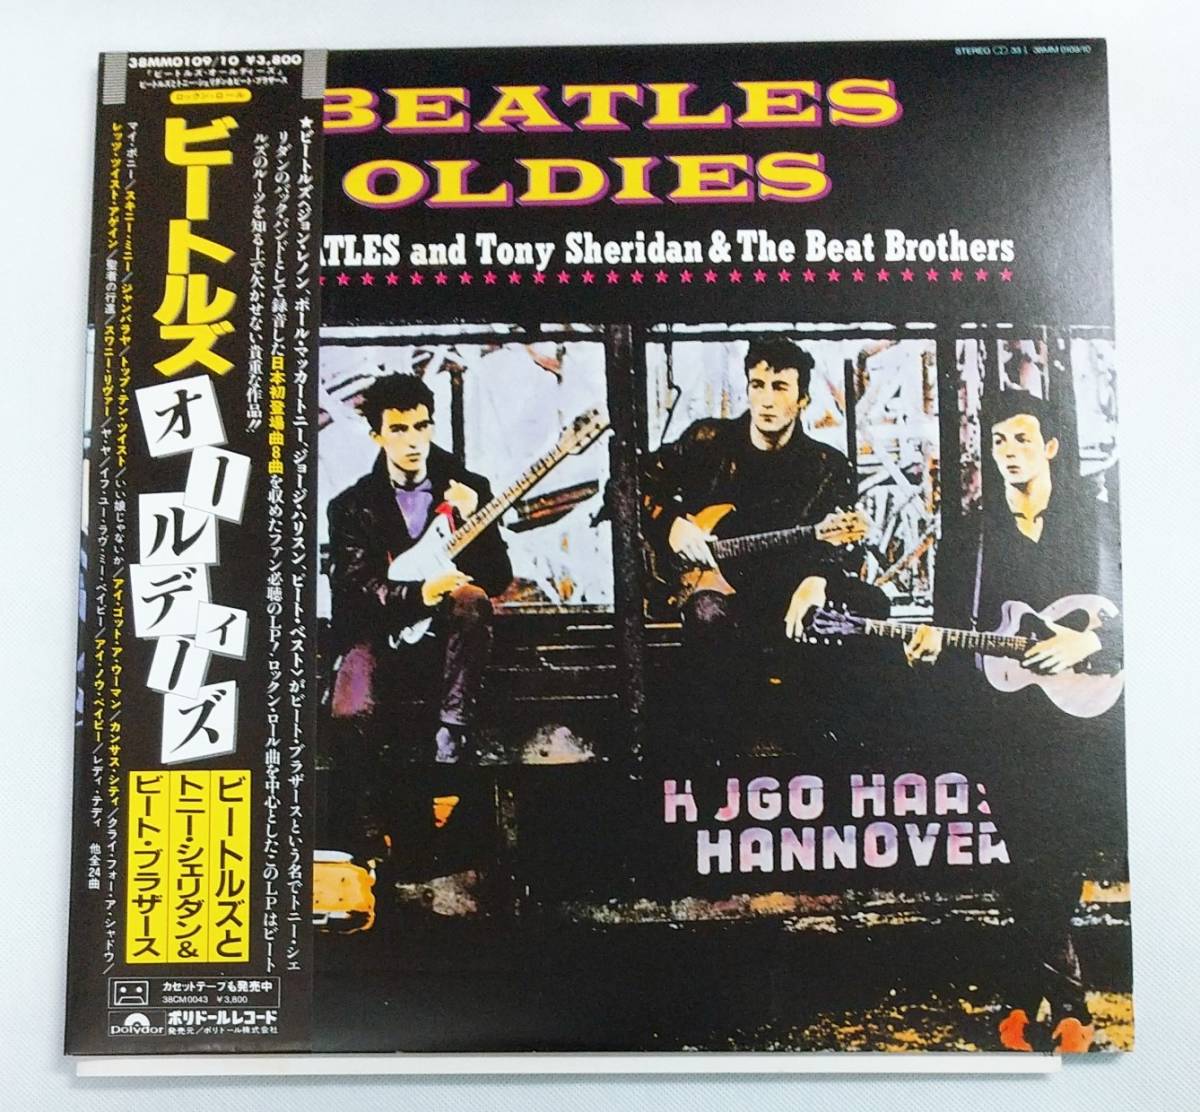 Yahoo!オークション - LPレコード/ビートルズ オールディーズ/BEATLES 